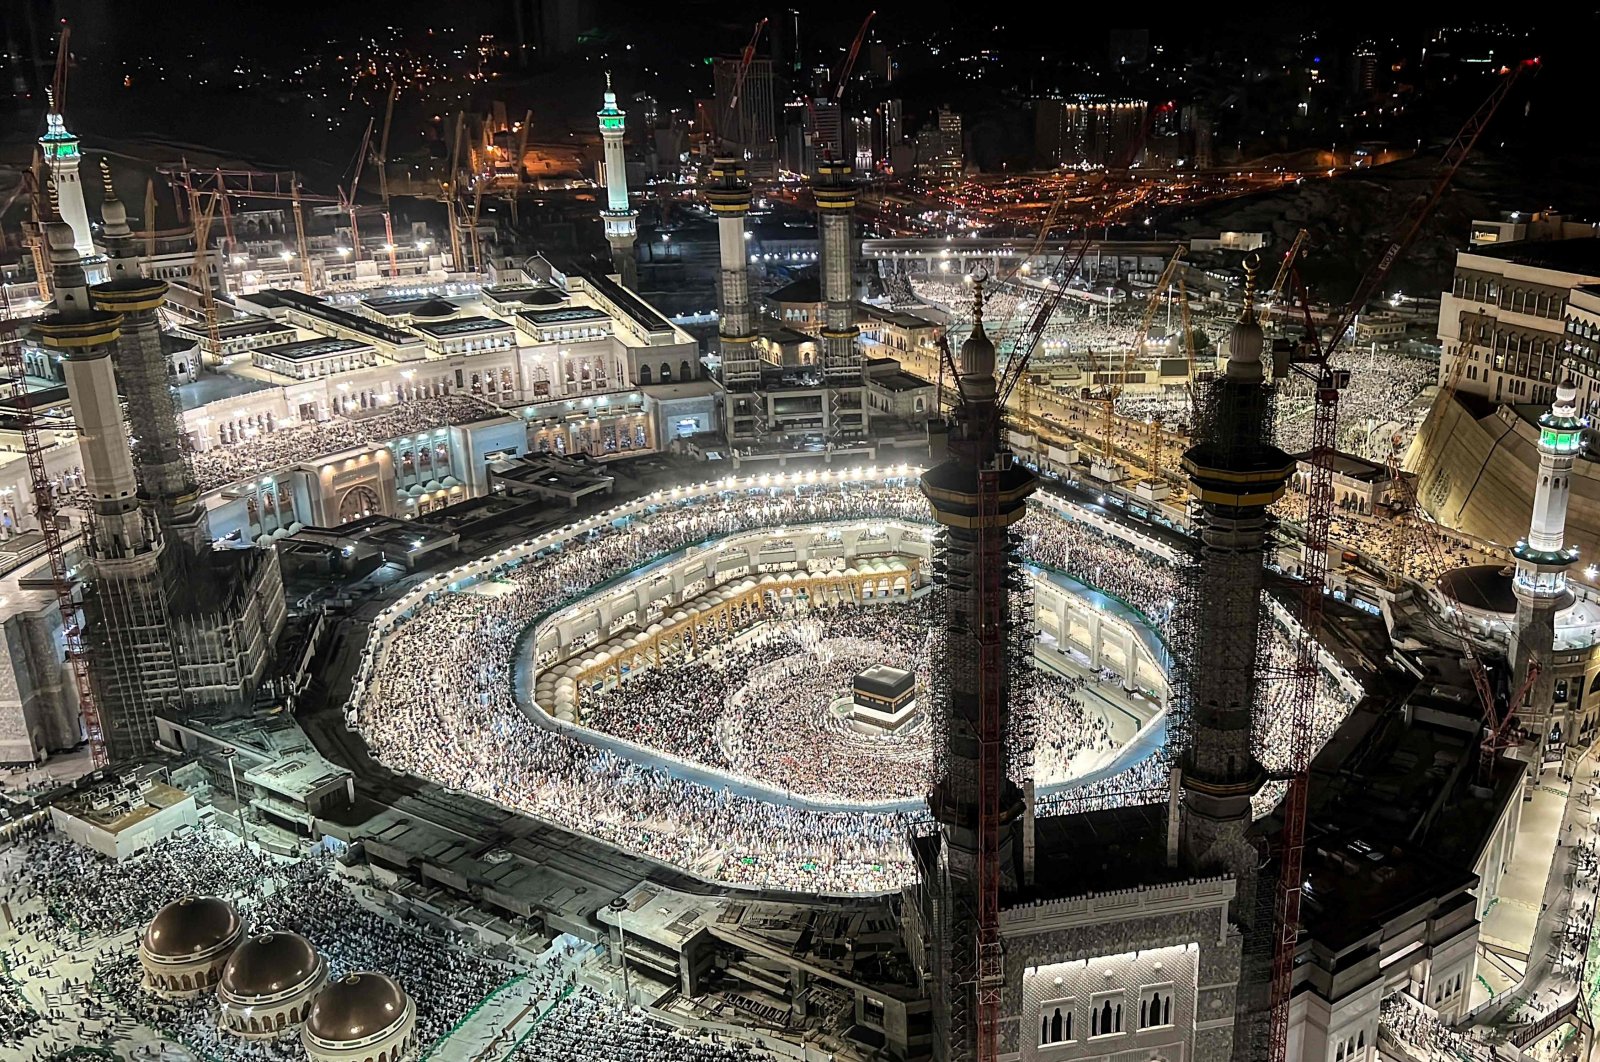 Jutaan Muslim menantang panas Saudi untuk berkumpul di Mekkah untuk haji